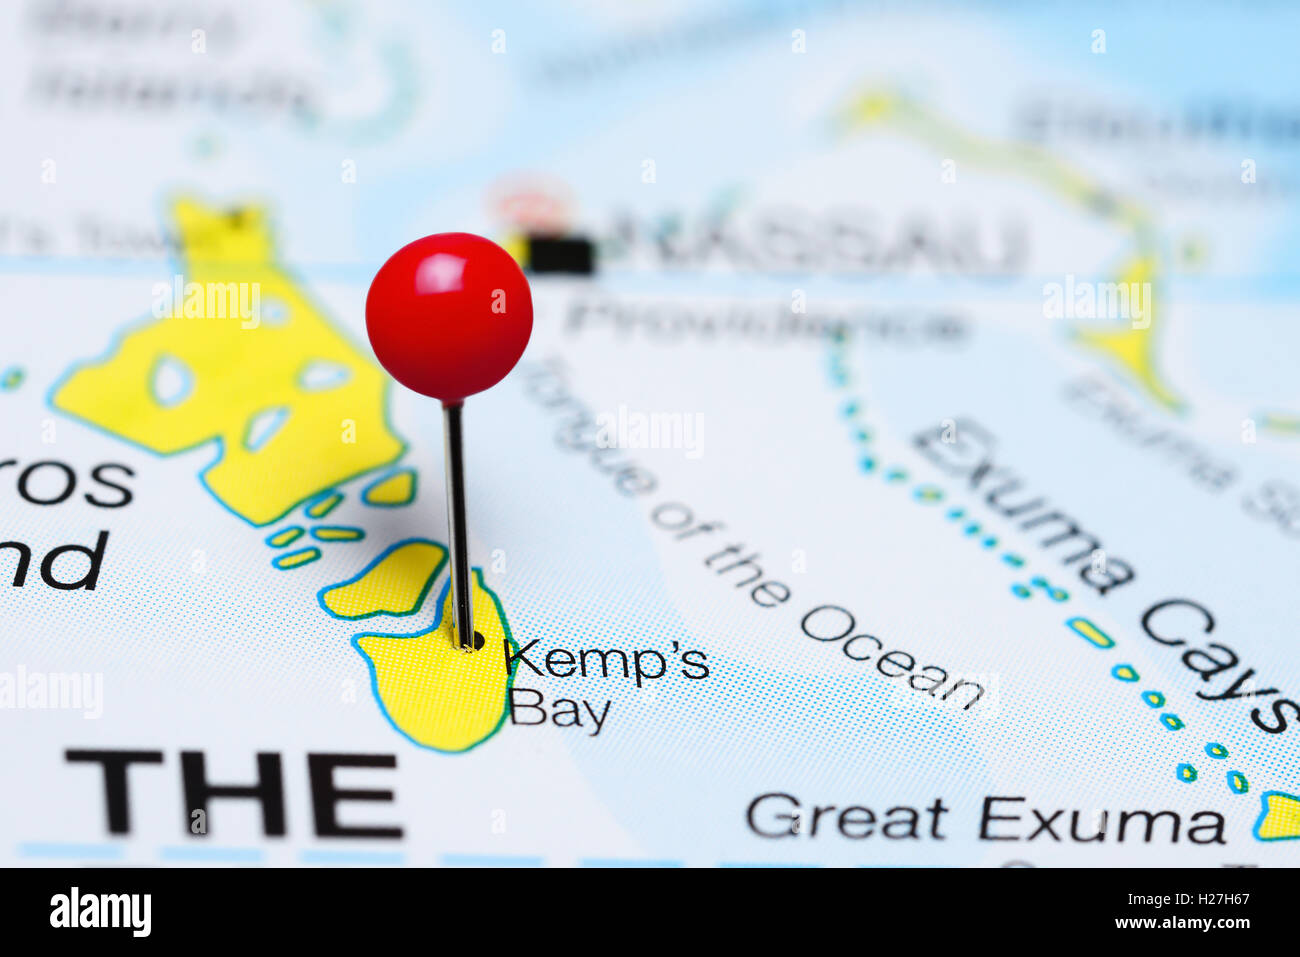 Kemps Bay pinned on a map of Bahamas Stock Photo